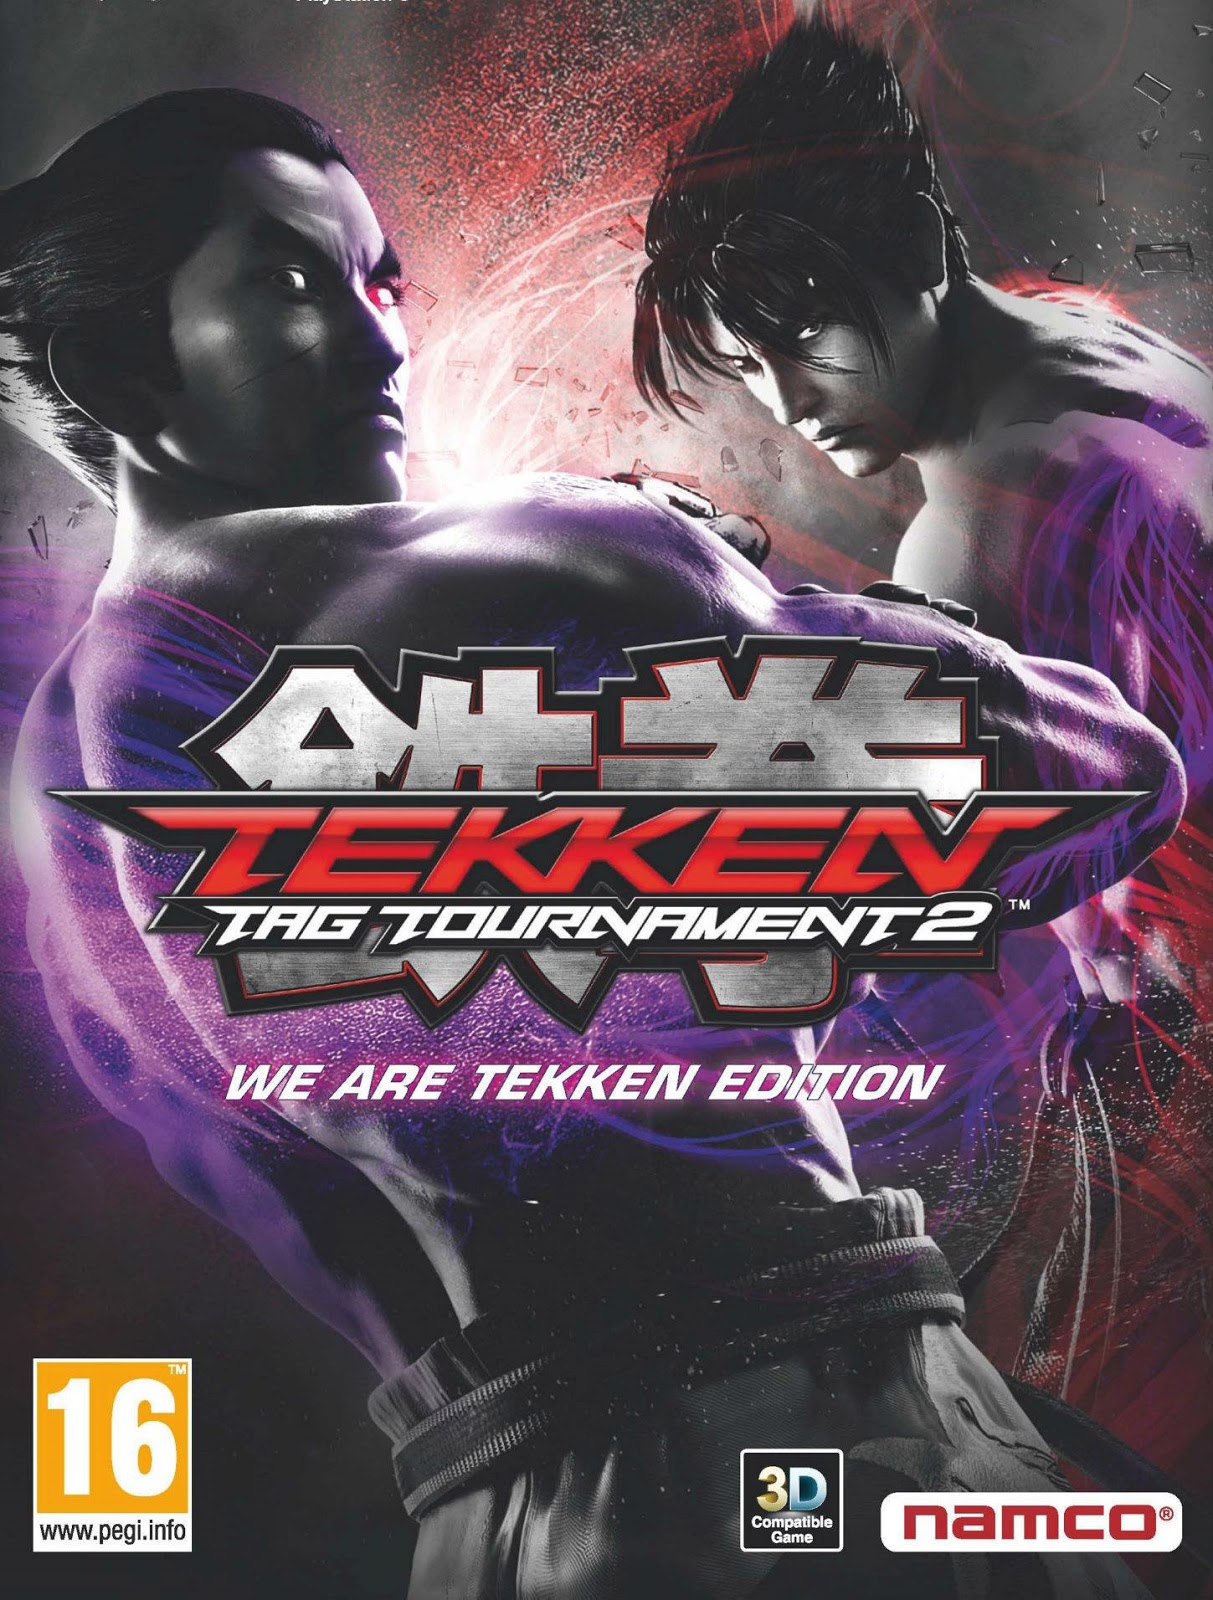 Tekken tag tournament 2 на компьютер скачать